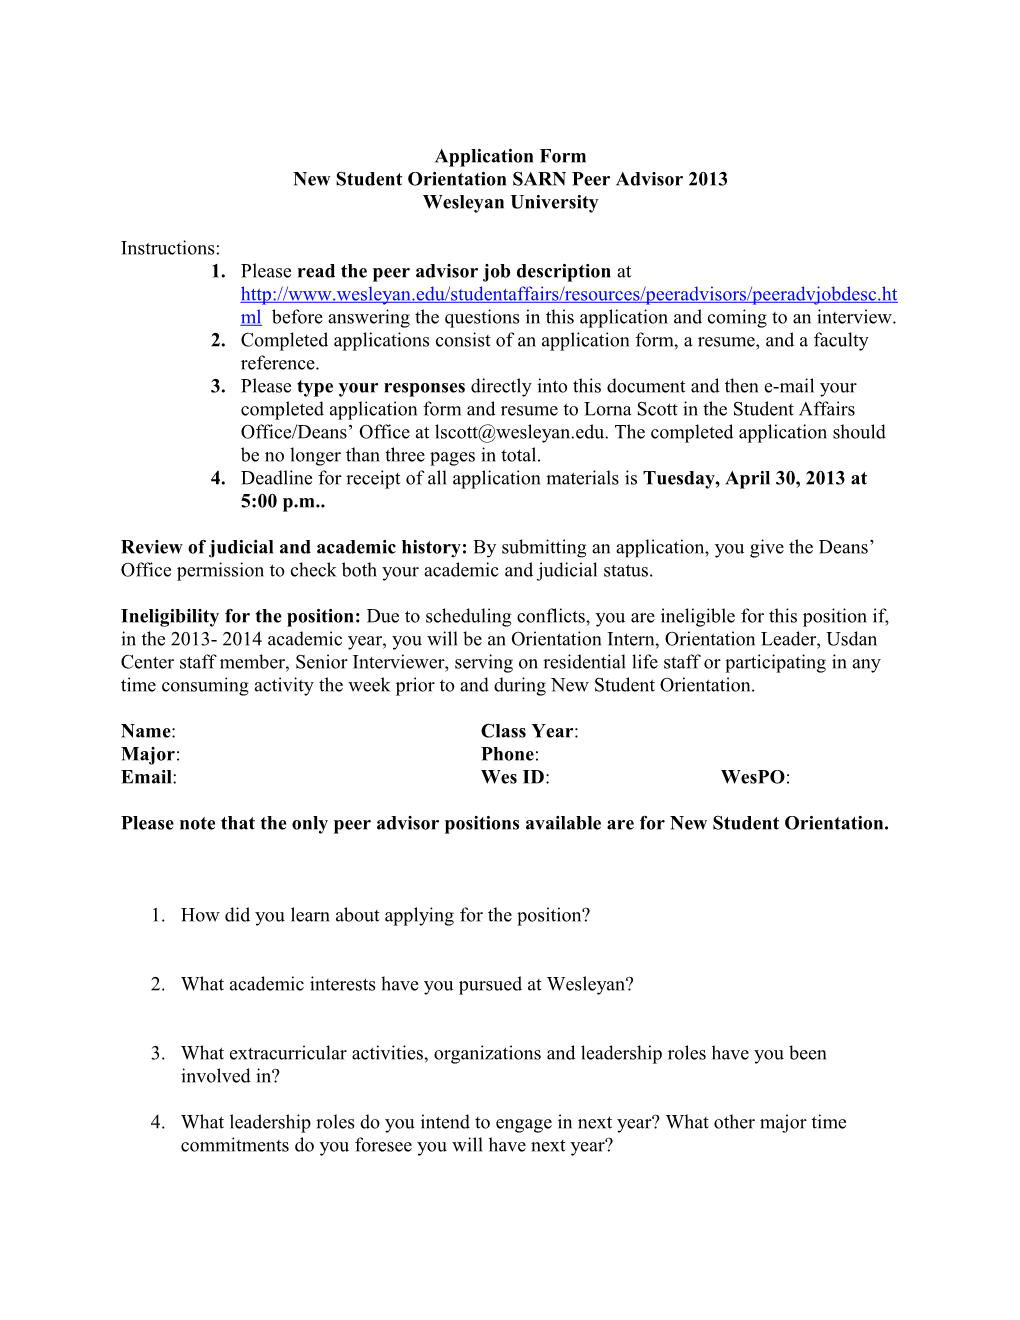 Application Form, NSO SARN Peer Advisor 2013